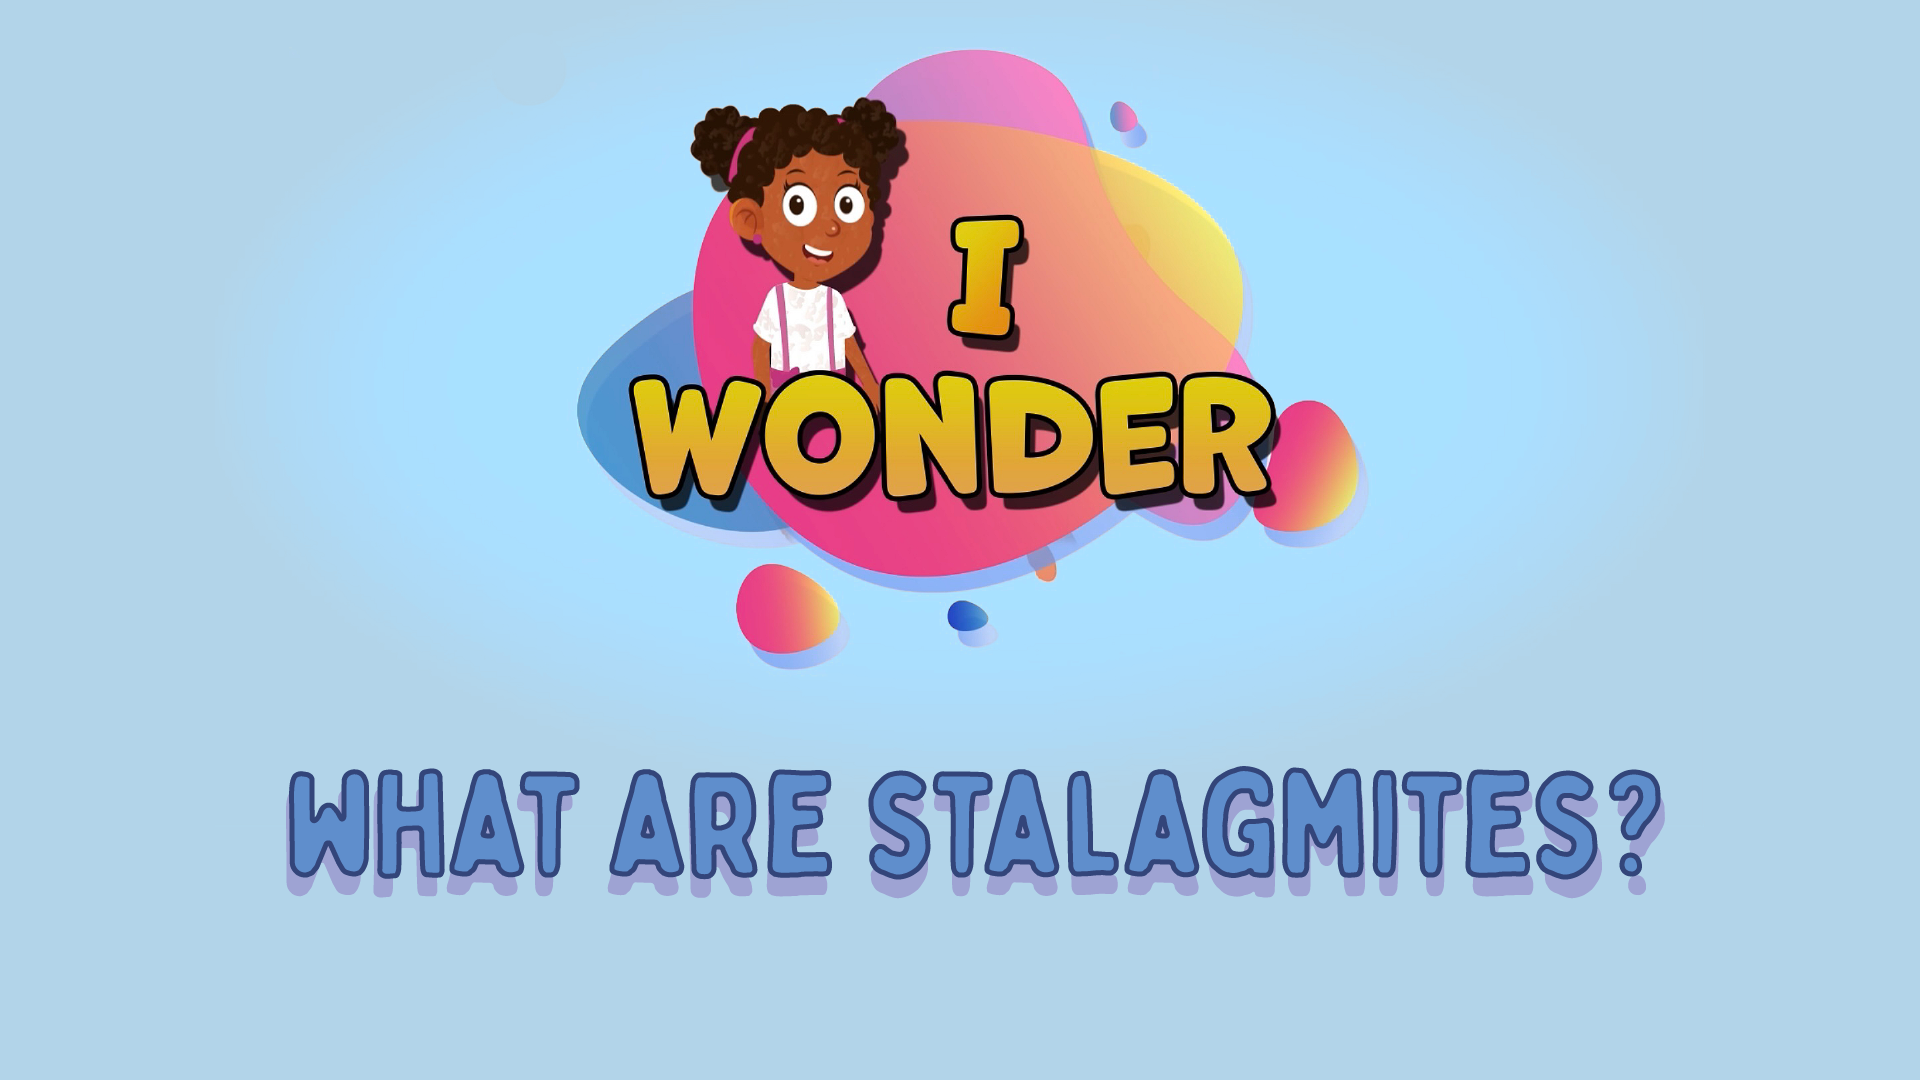 What Are Stalagmites?